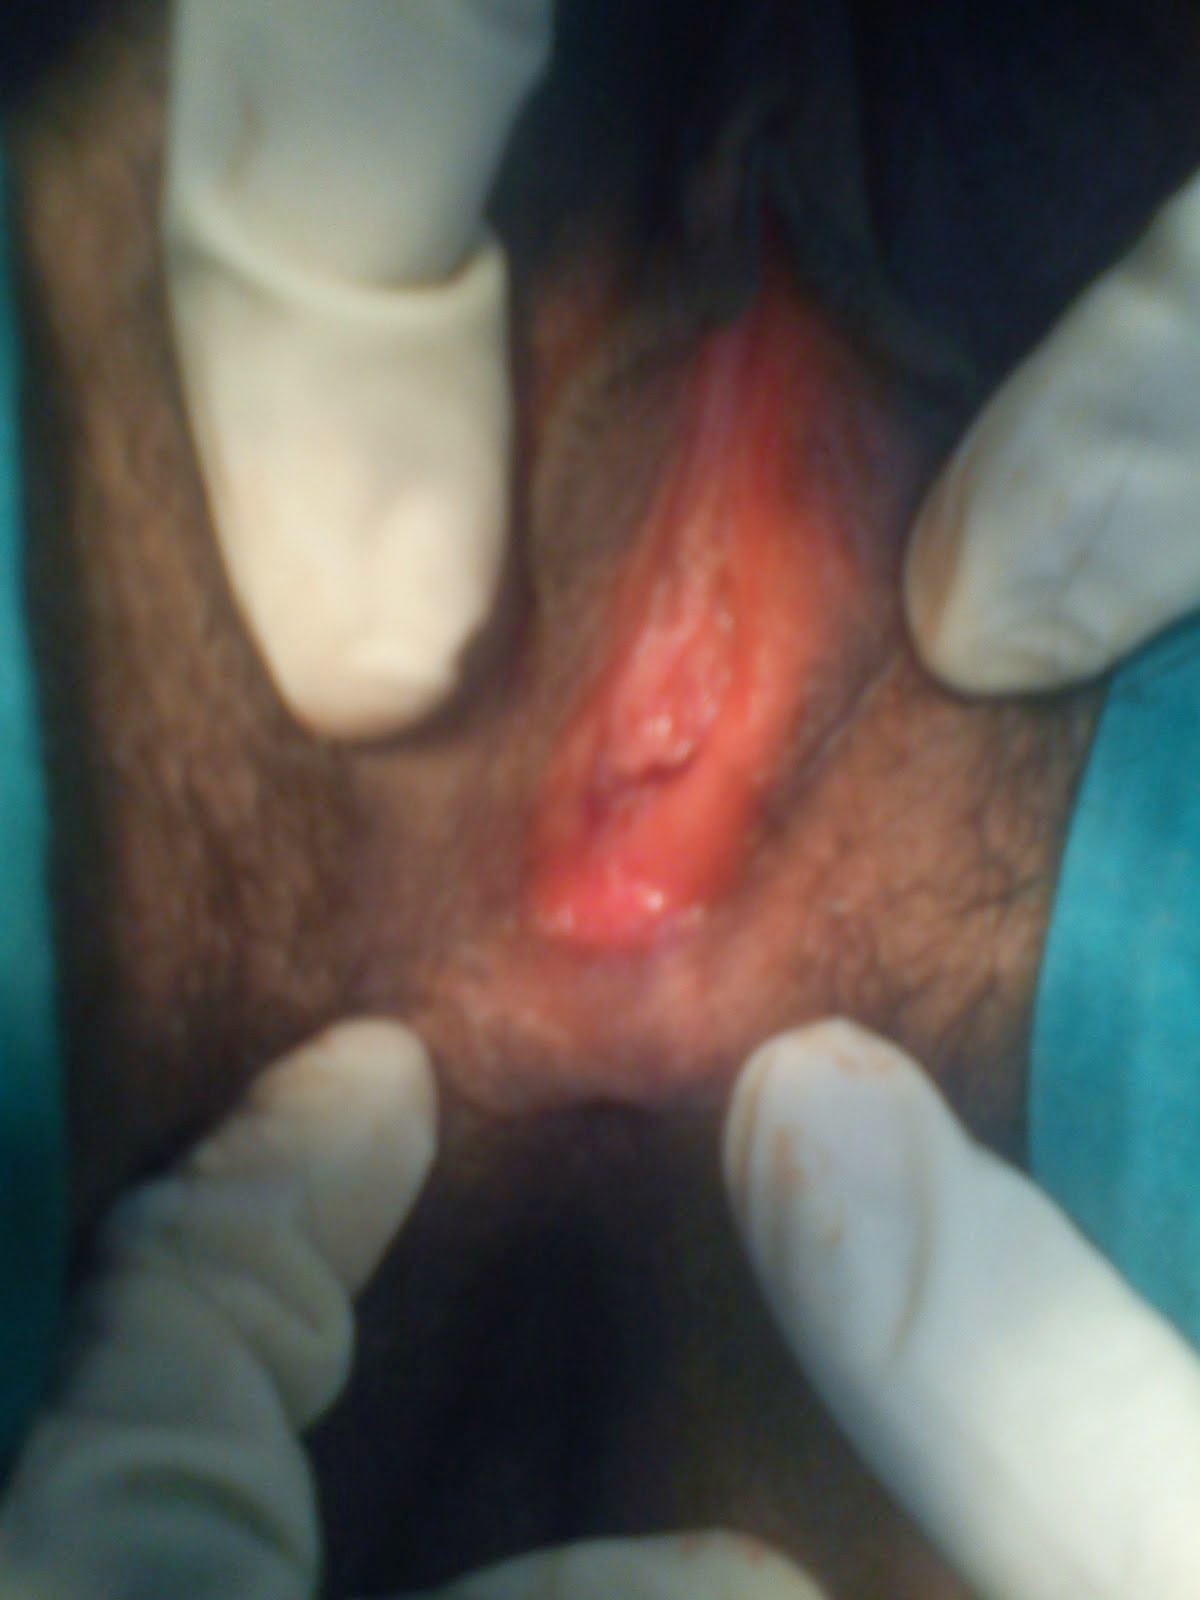 Hymen reconstruction surgery